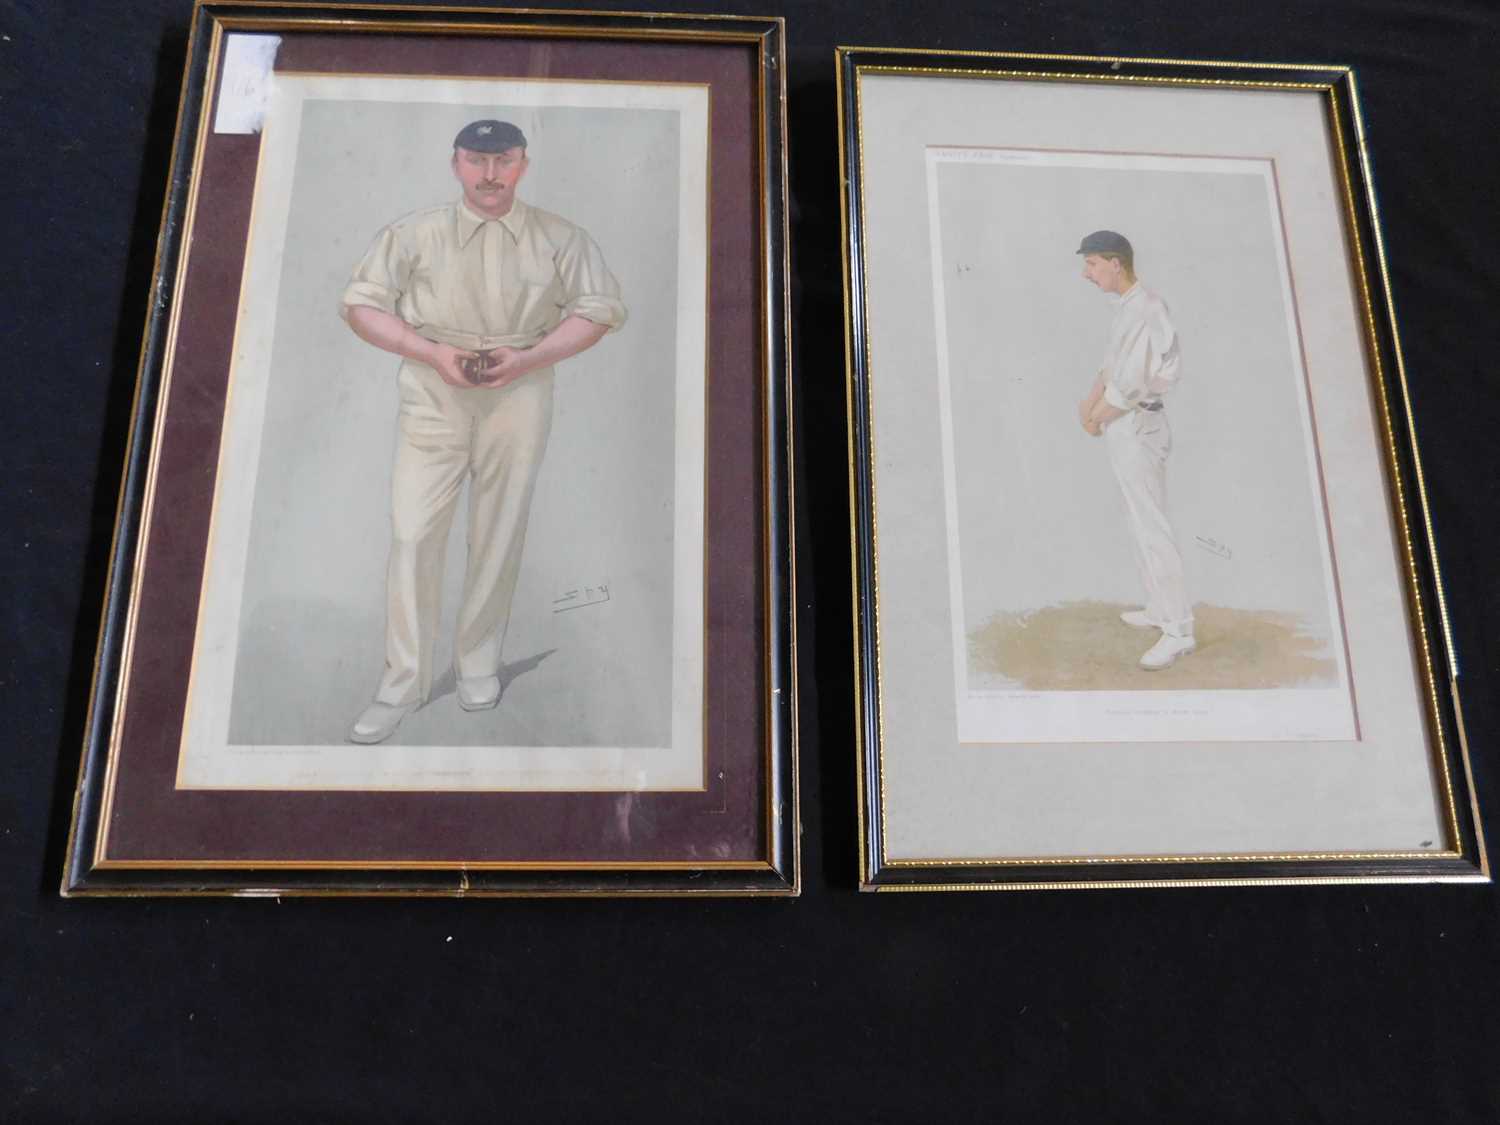 4 framed and glazed Vanity Fair coloured litho cricket caricatures 'Yorkshire', 'Plum', 'Monkey' and - Image 2 of 2